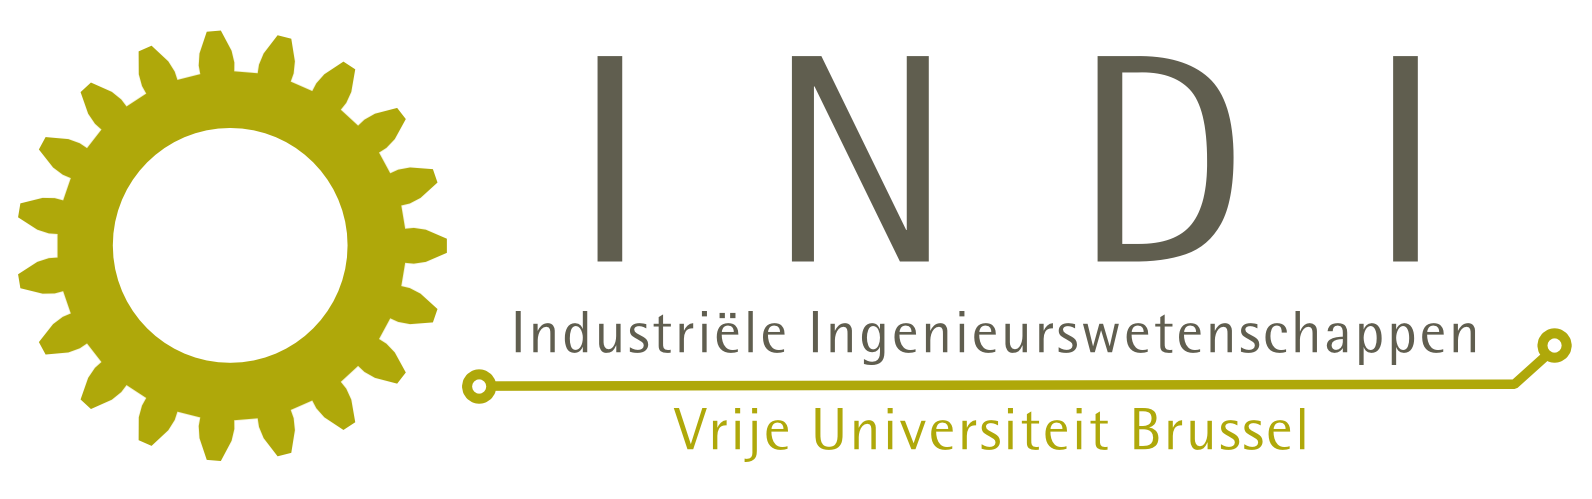 INDI_logo - BrusselsRetrofitXL